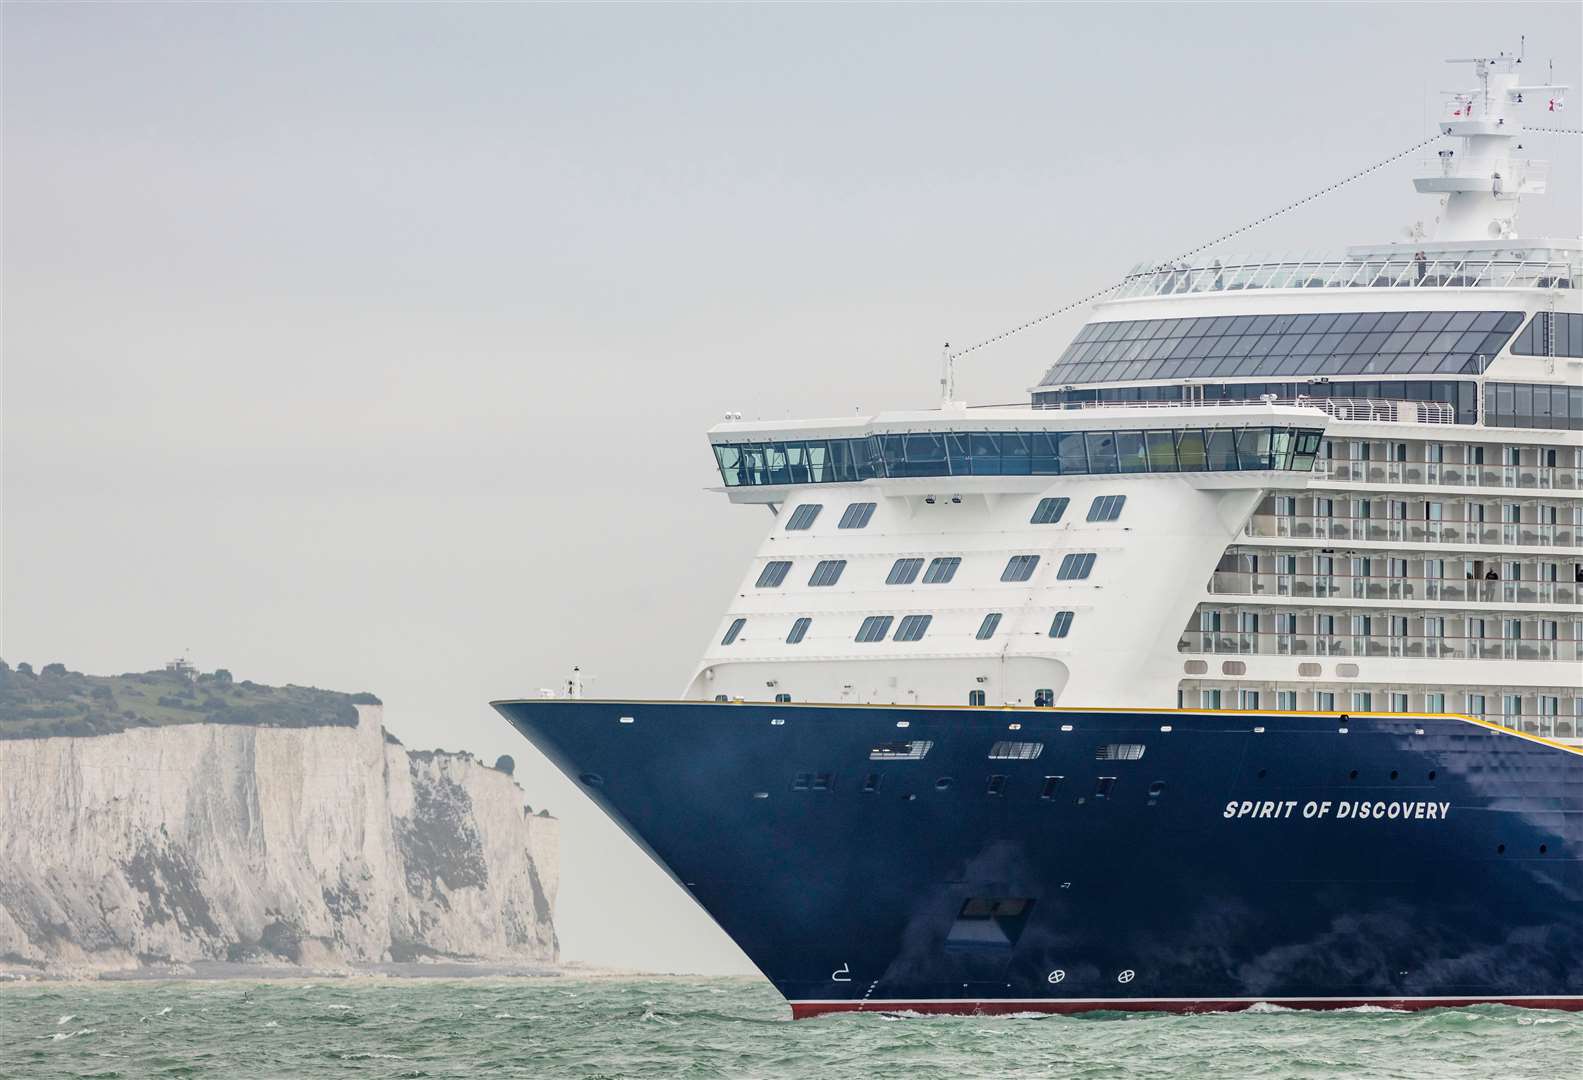 Saga operates a number of cruise ships